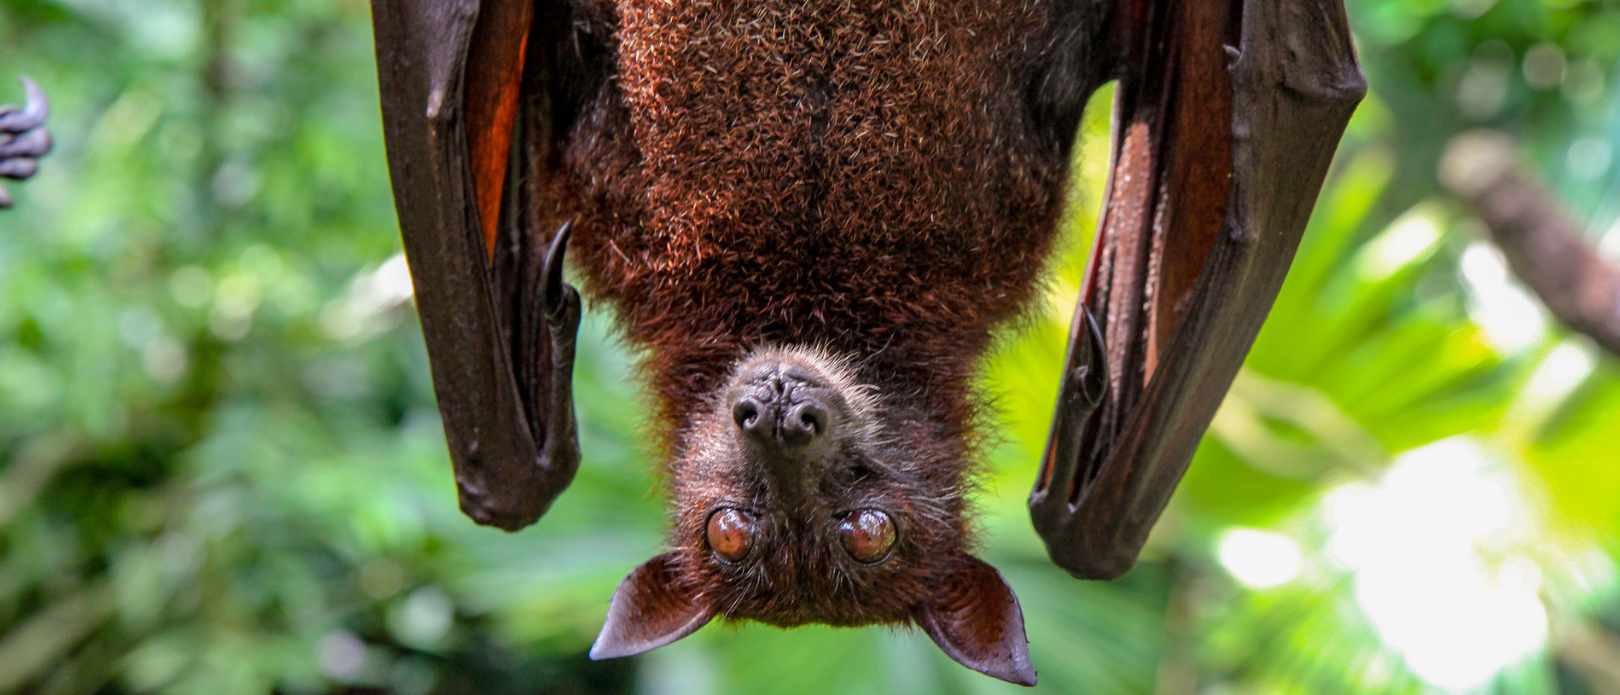 Fruit bat on tree